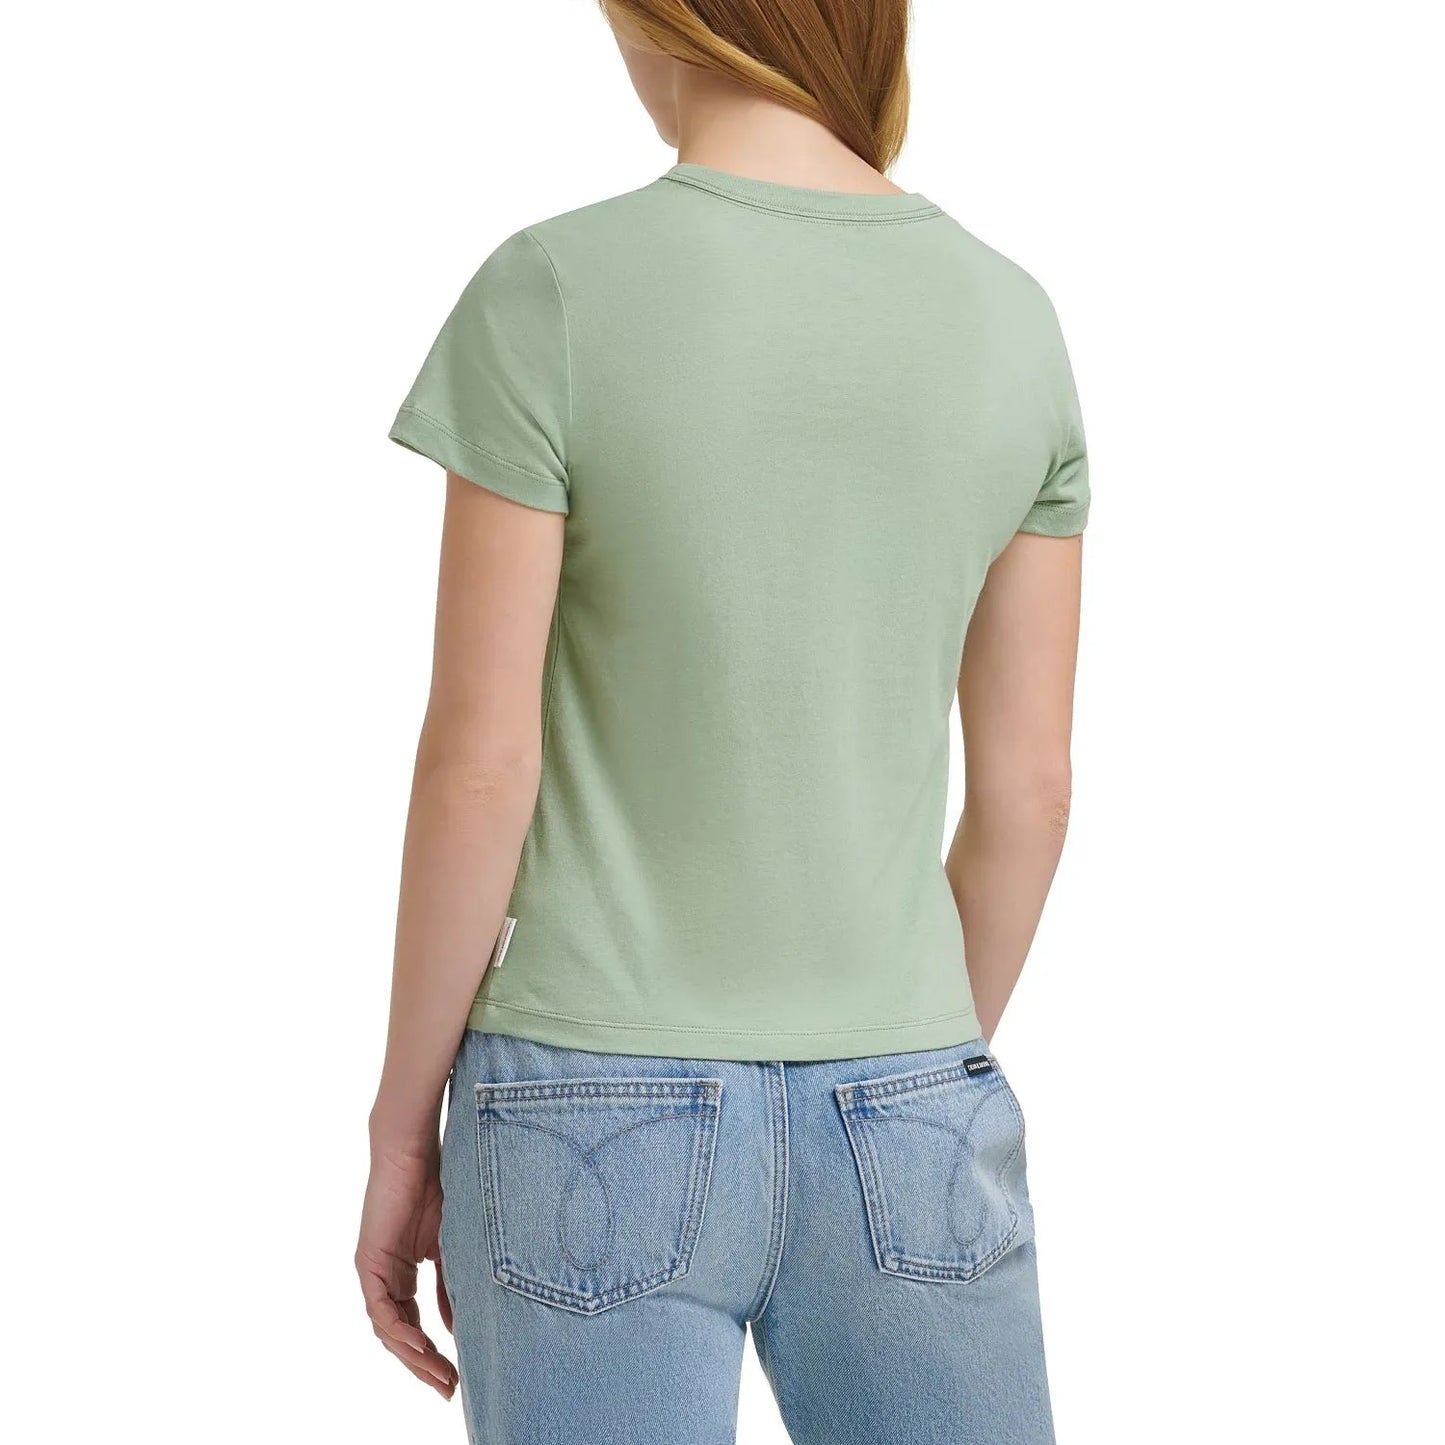 Calvin Klein-Calvin Klein Jeans Logo T-Shirt, Green, Size: XL - Brandat Outlet